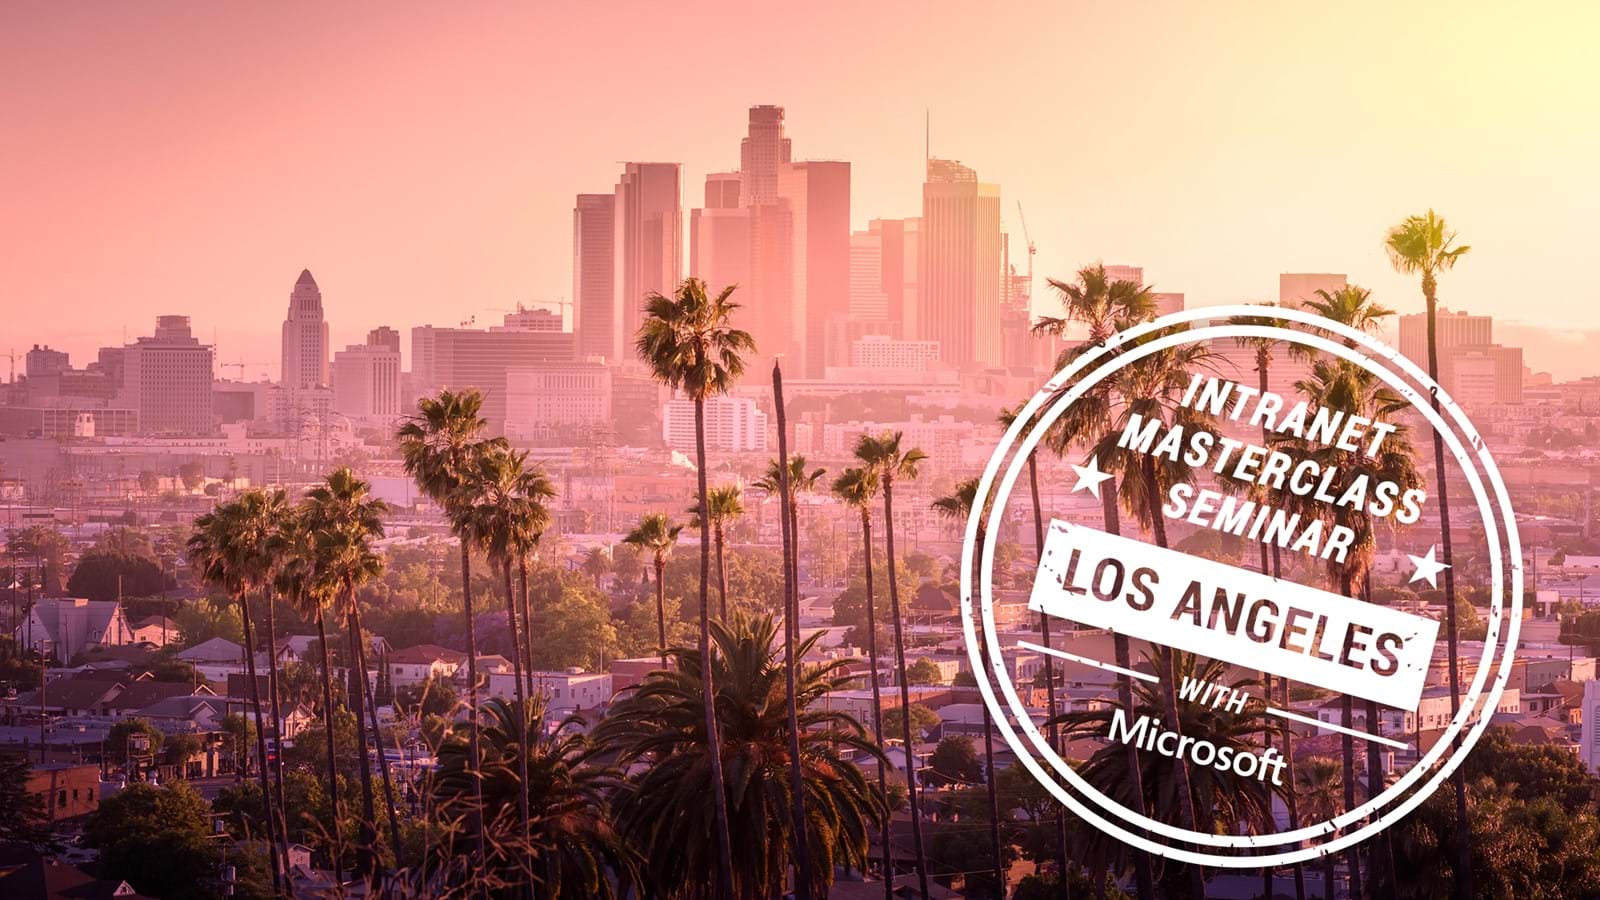 Los Angeles skyline for intranet seminar event